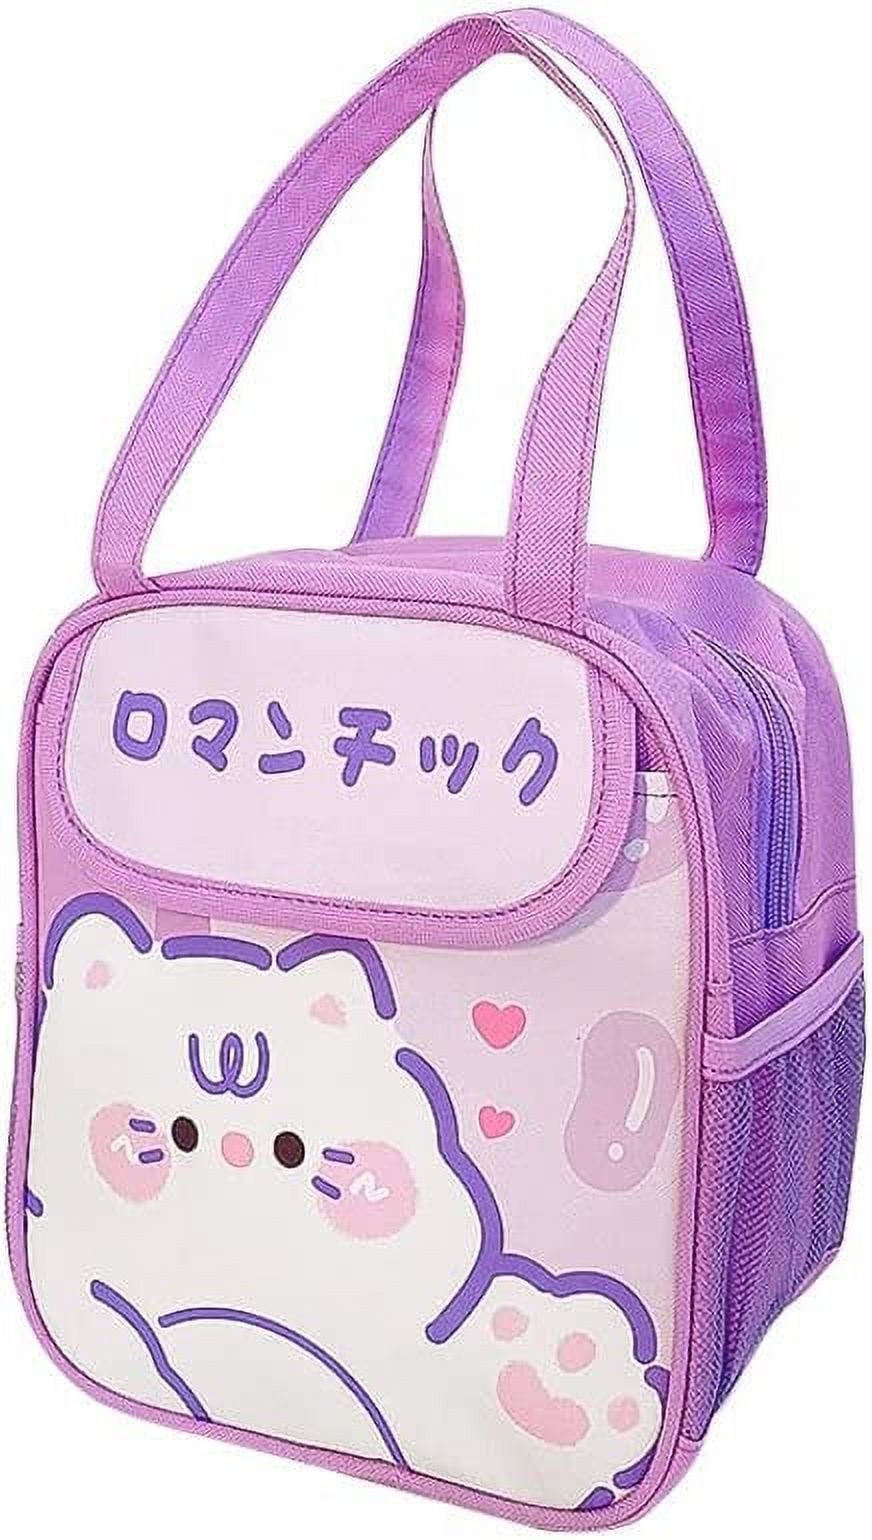  irLocy Cute Lunch Bags for Women Cute Lunch Box Kawaii Small  Lunch Bag Kawaii Stuff Kawaii Accessories Supplies (Purple Bunny(only  cloth)): Home & Kitchen